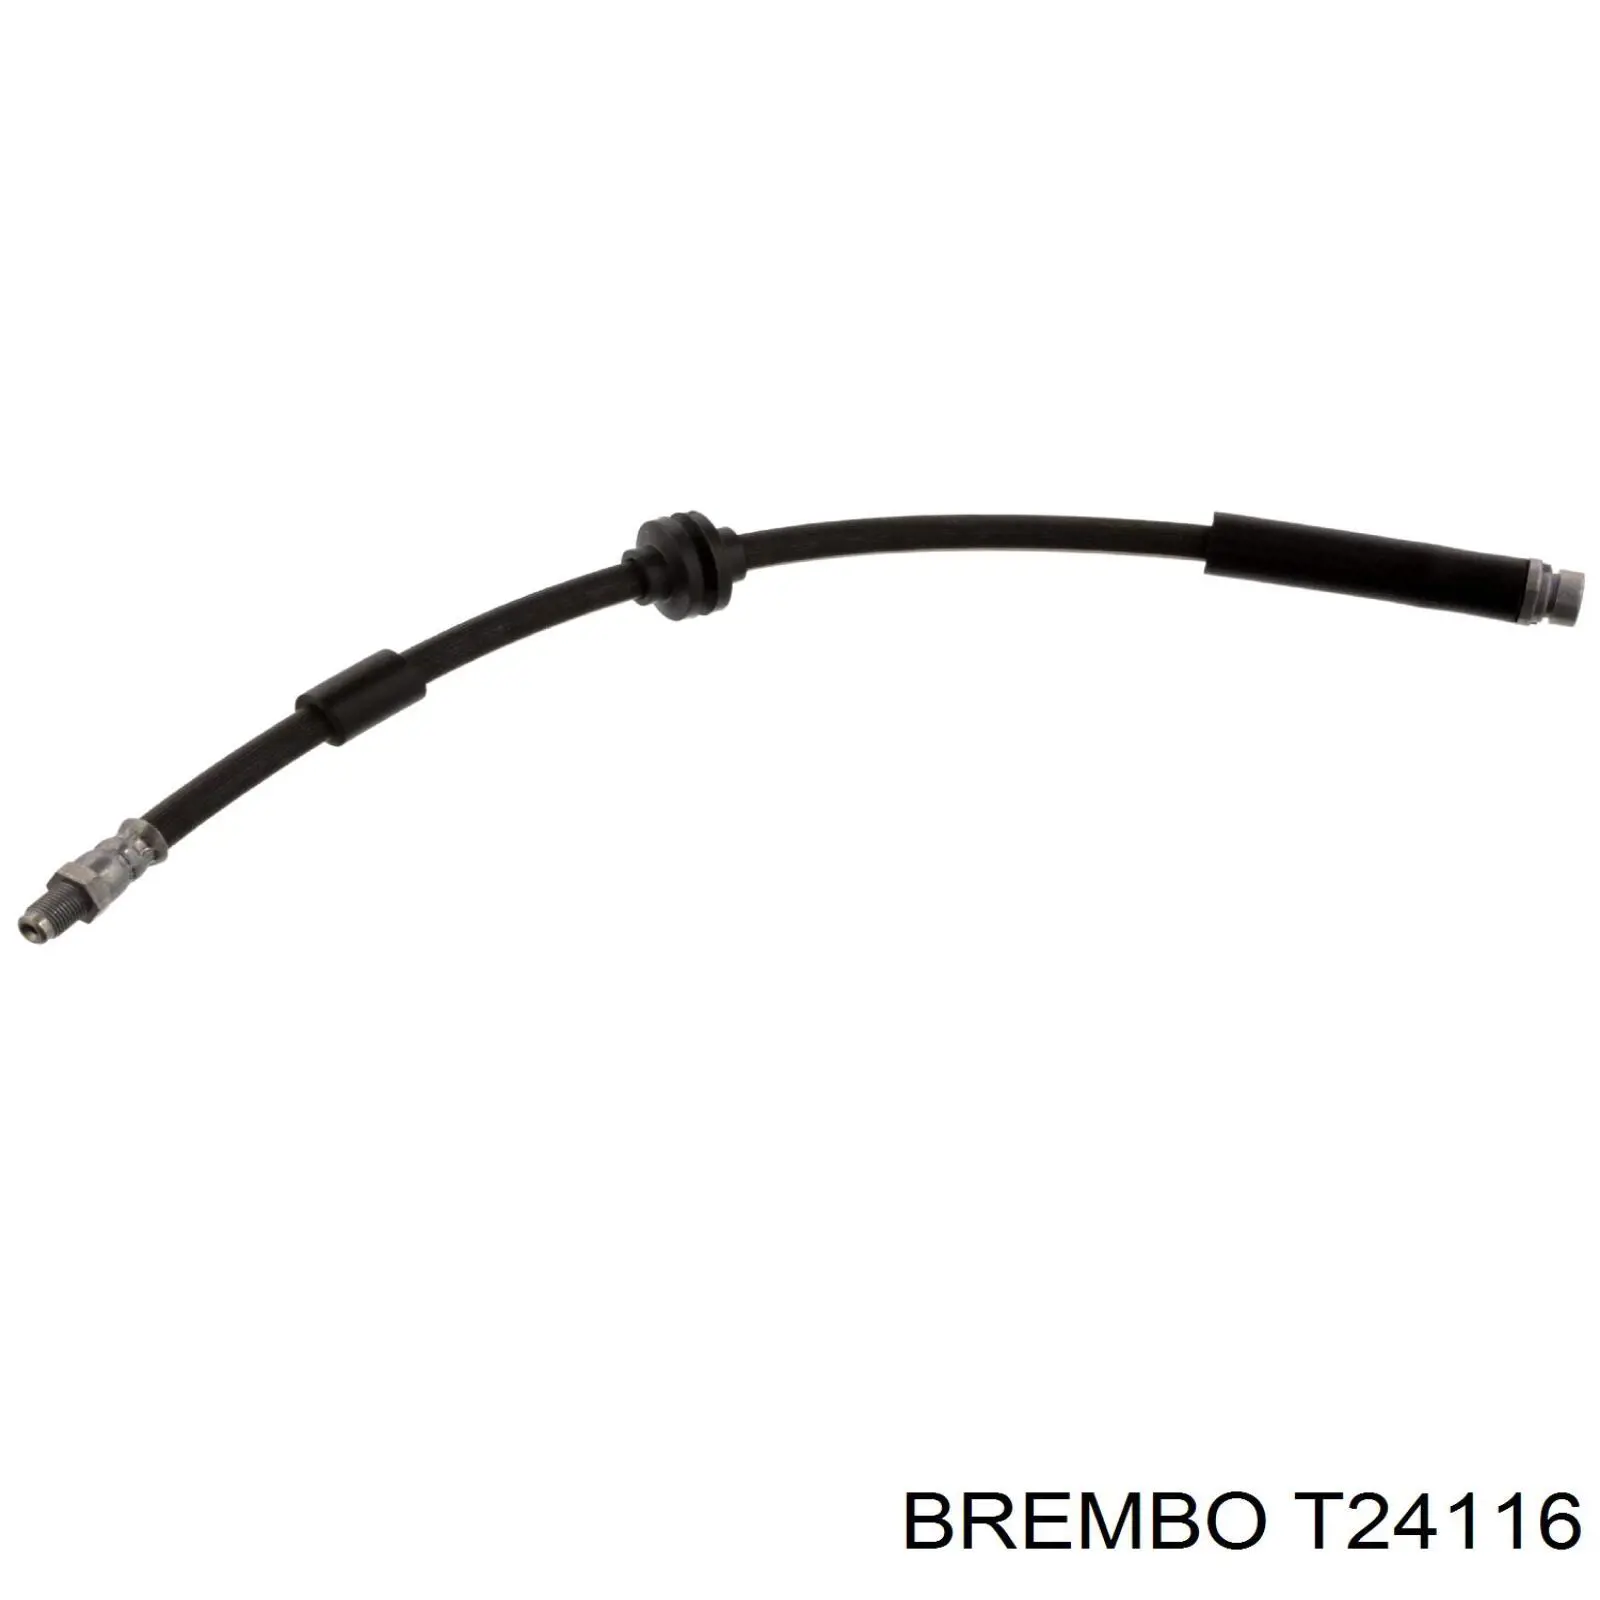 Tubo flexible de frenos trasero T24116 Brembo